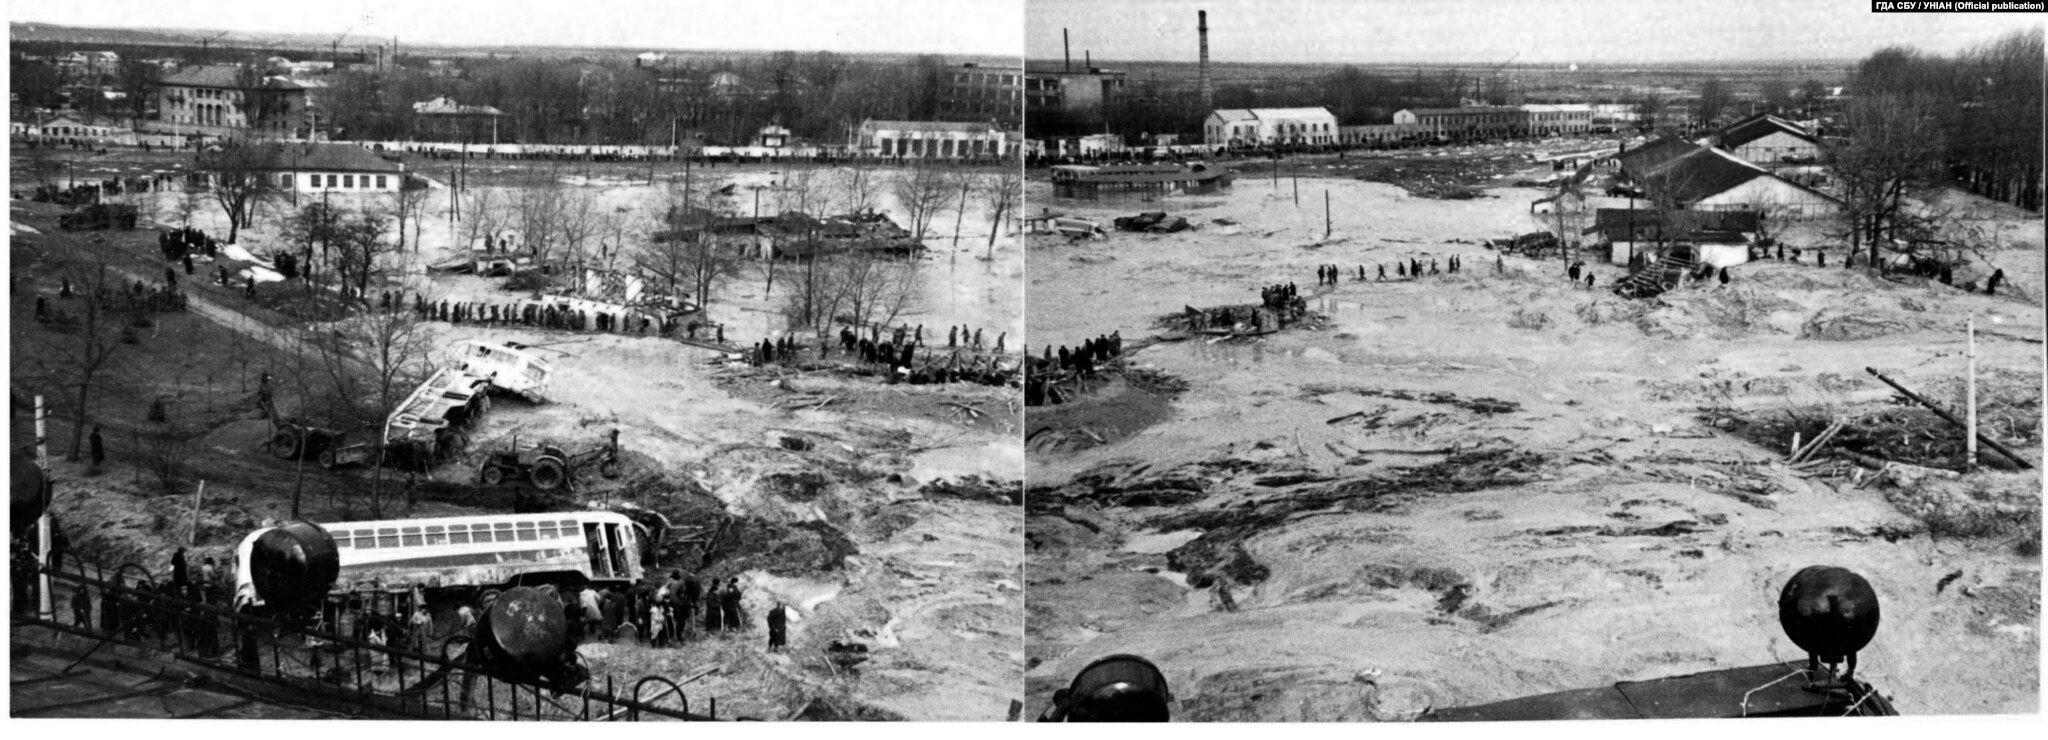 The aftermath of the 13 March 1961 Kurenivka mudslide in Ukraine. 